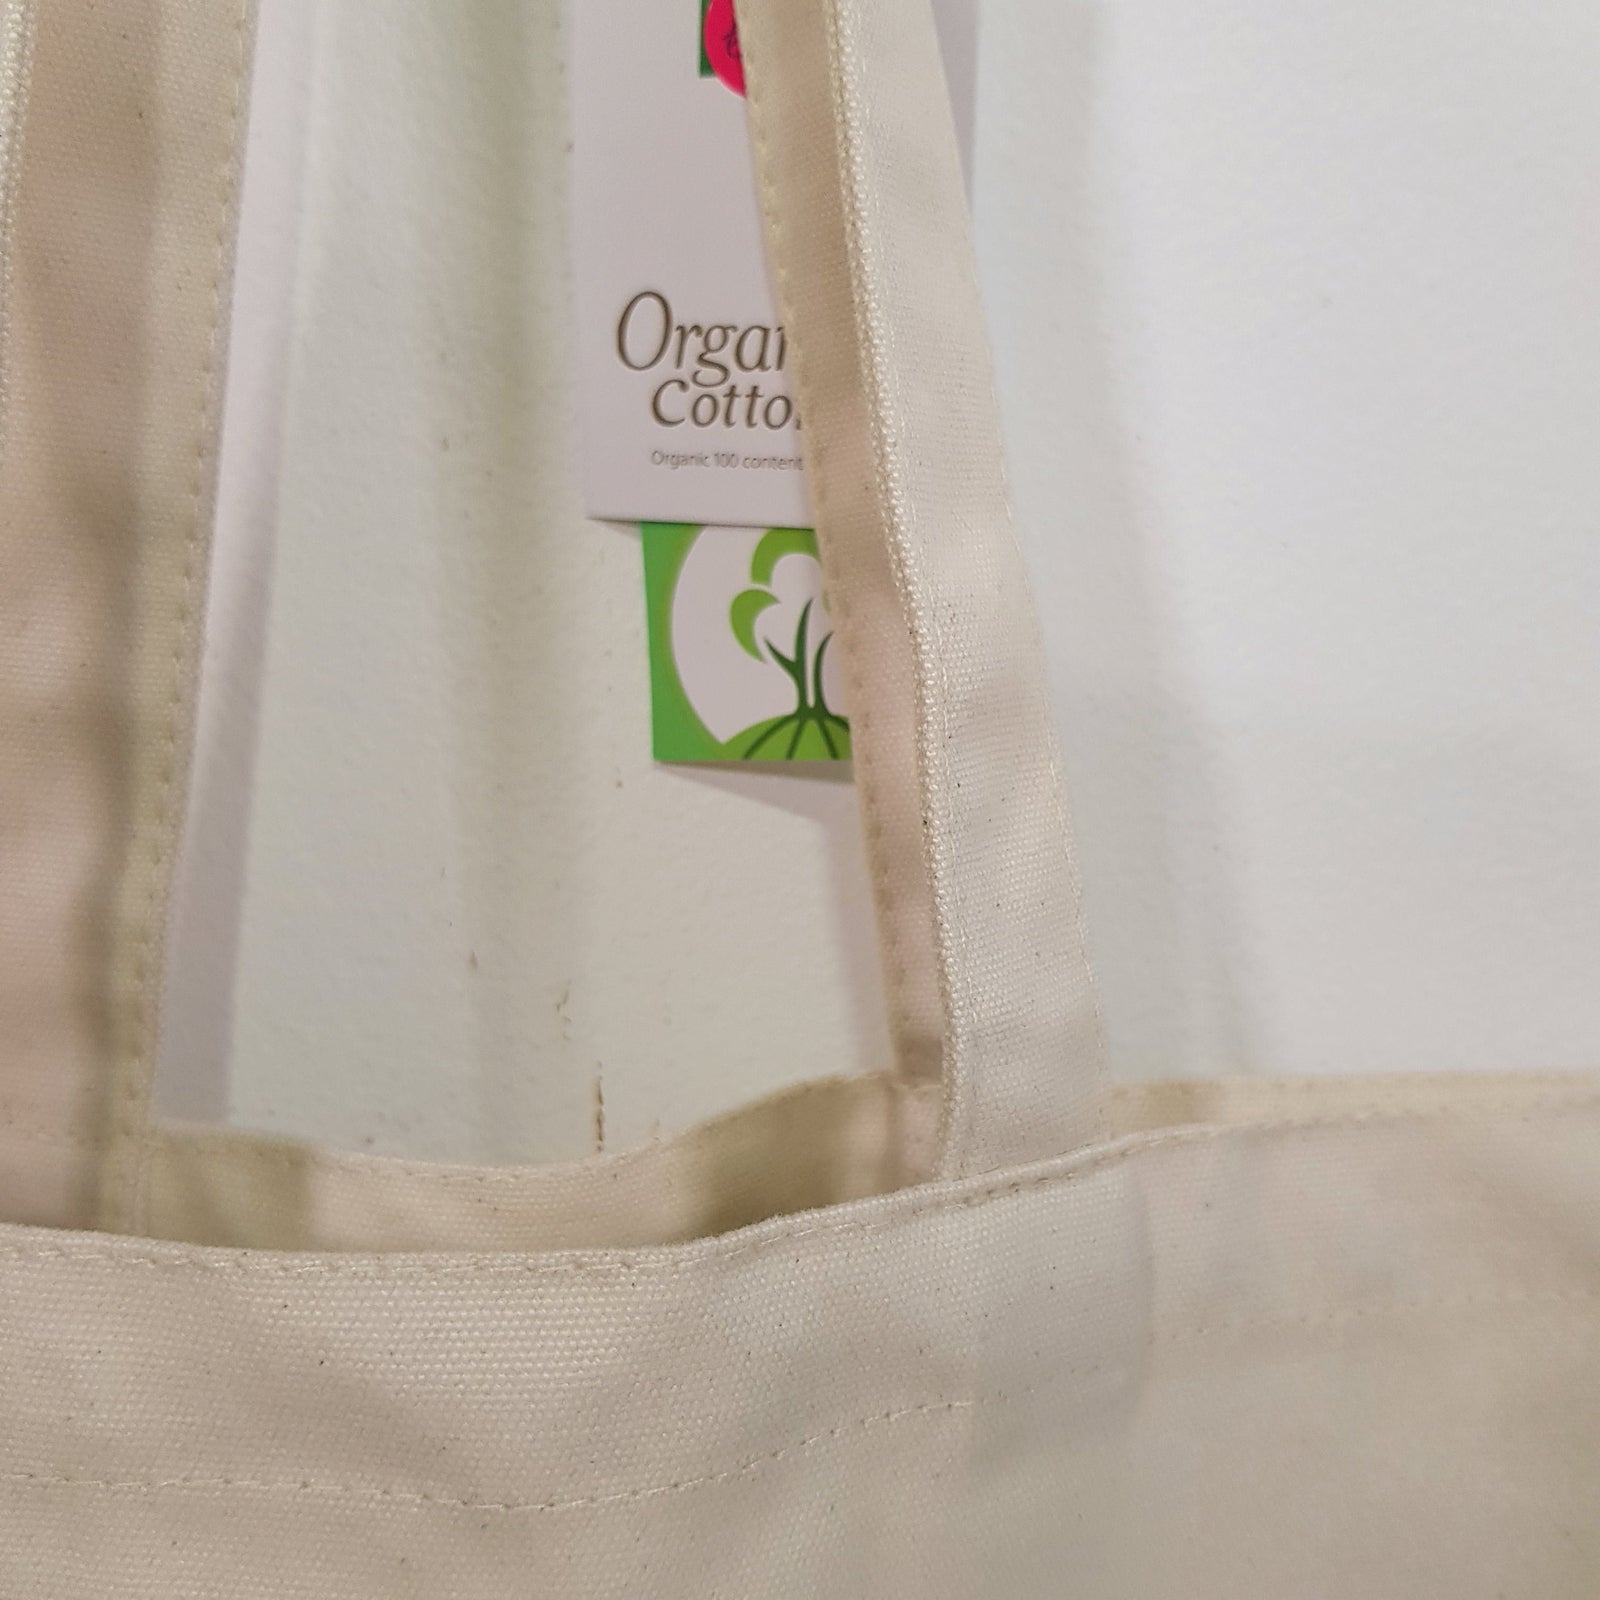 pure love spray organic cotton premium tote bag te koop in de webshop van Almost Summer Amsterdam